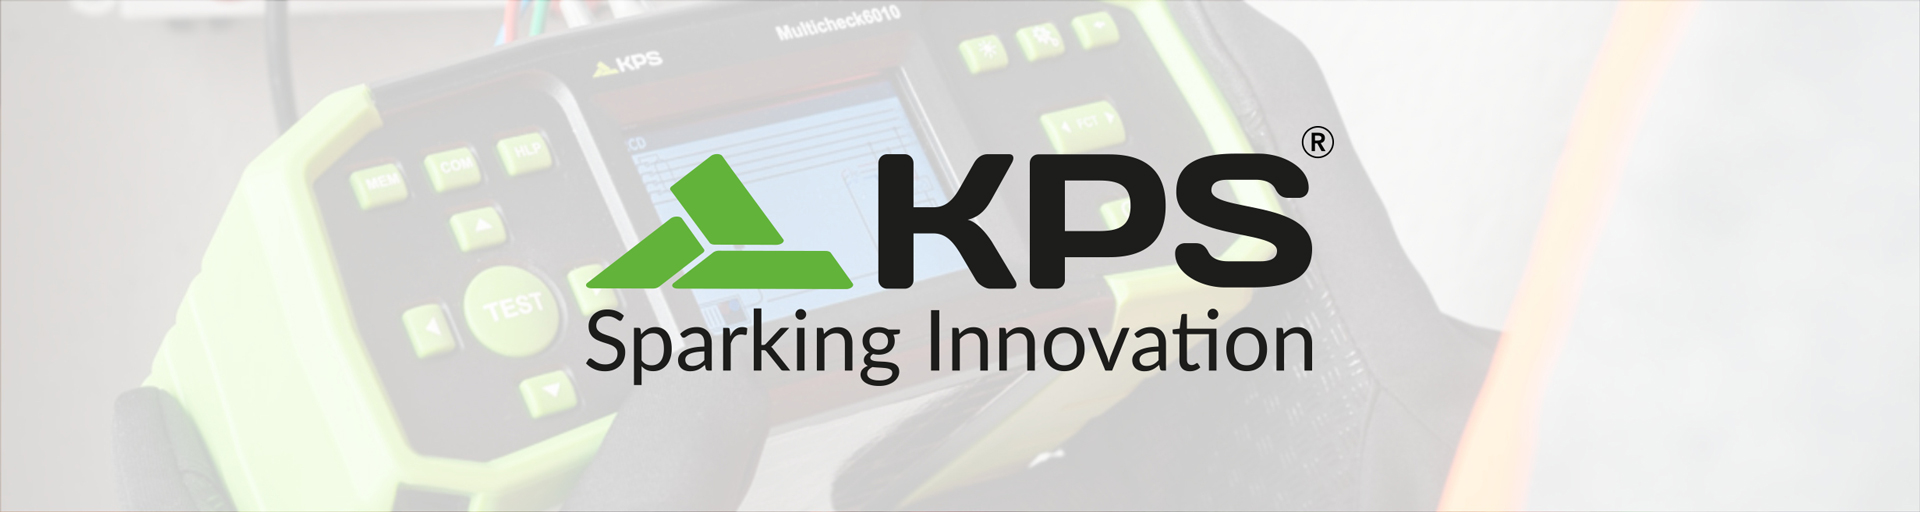 KPS Euman sparking innovations